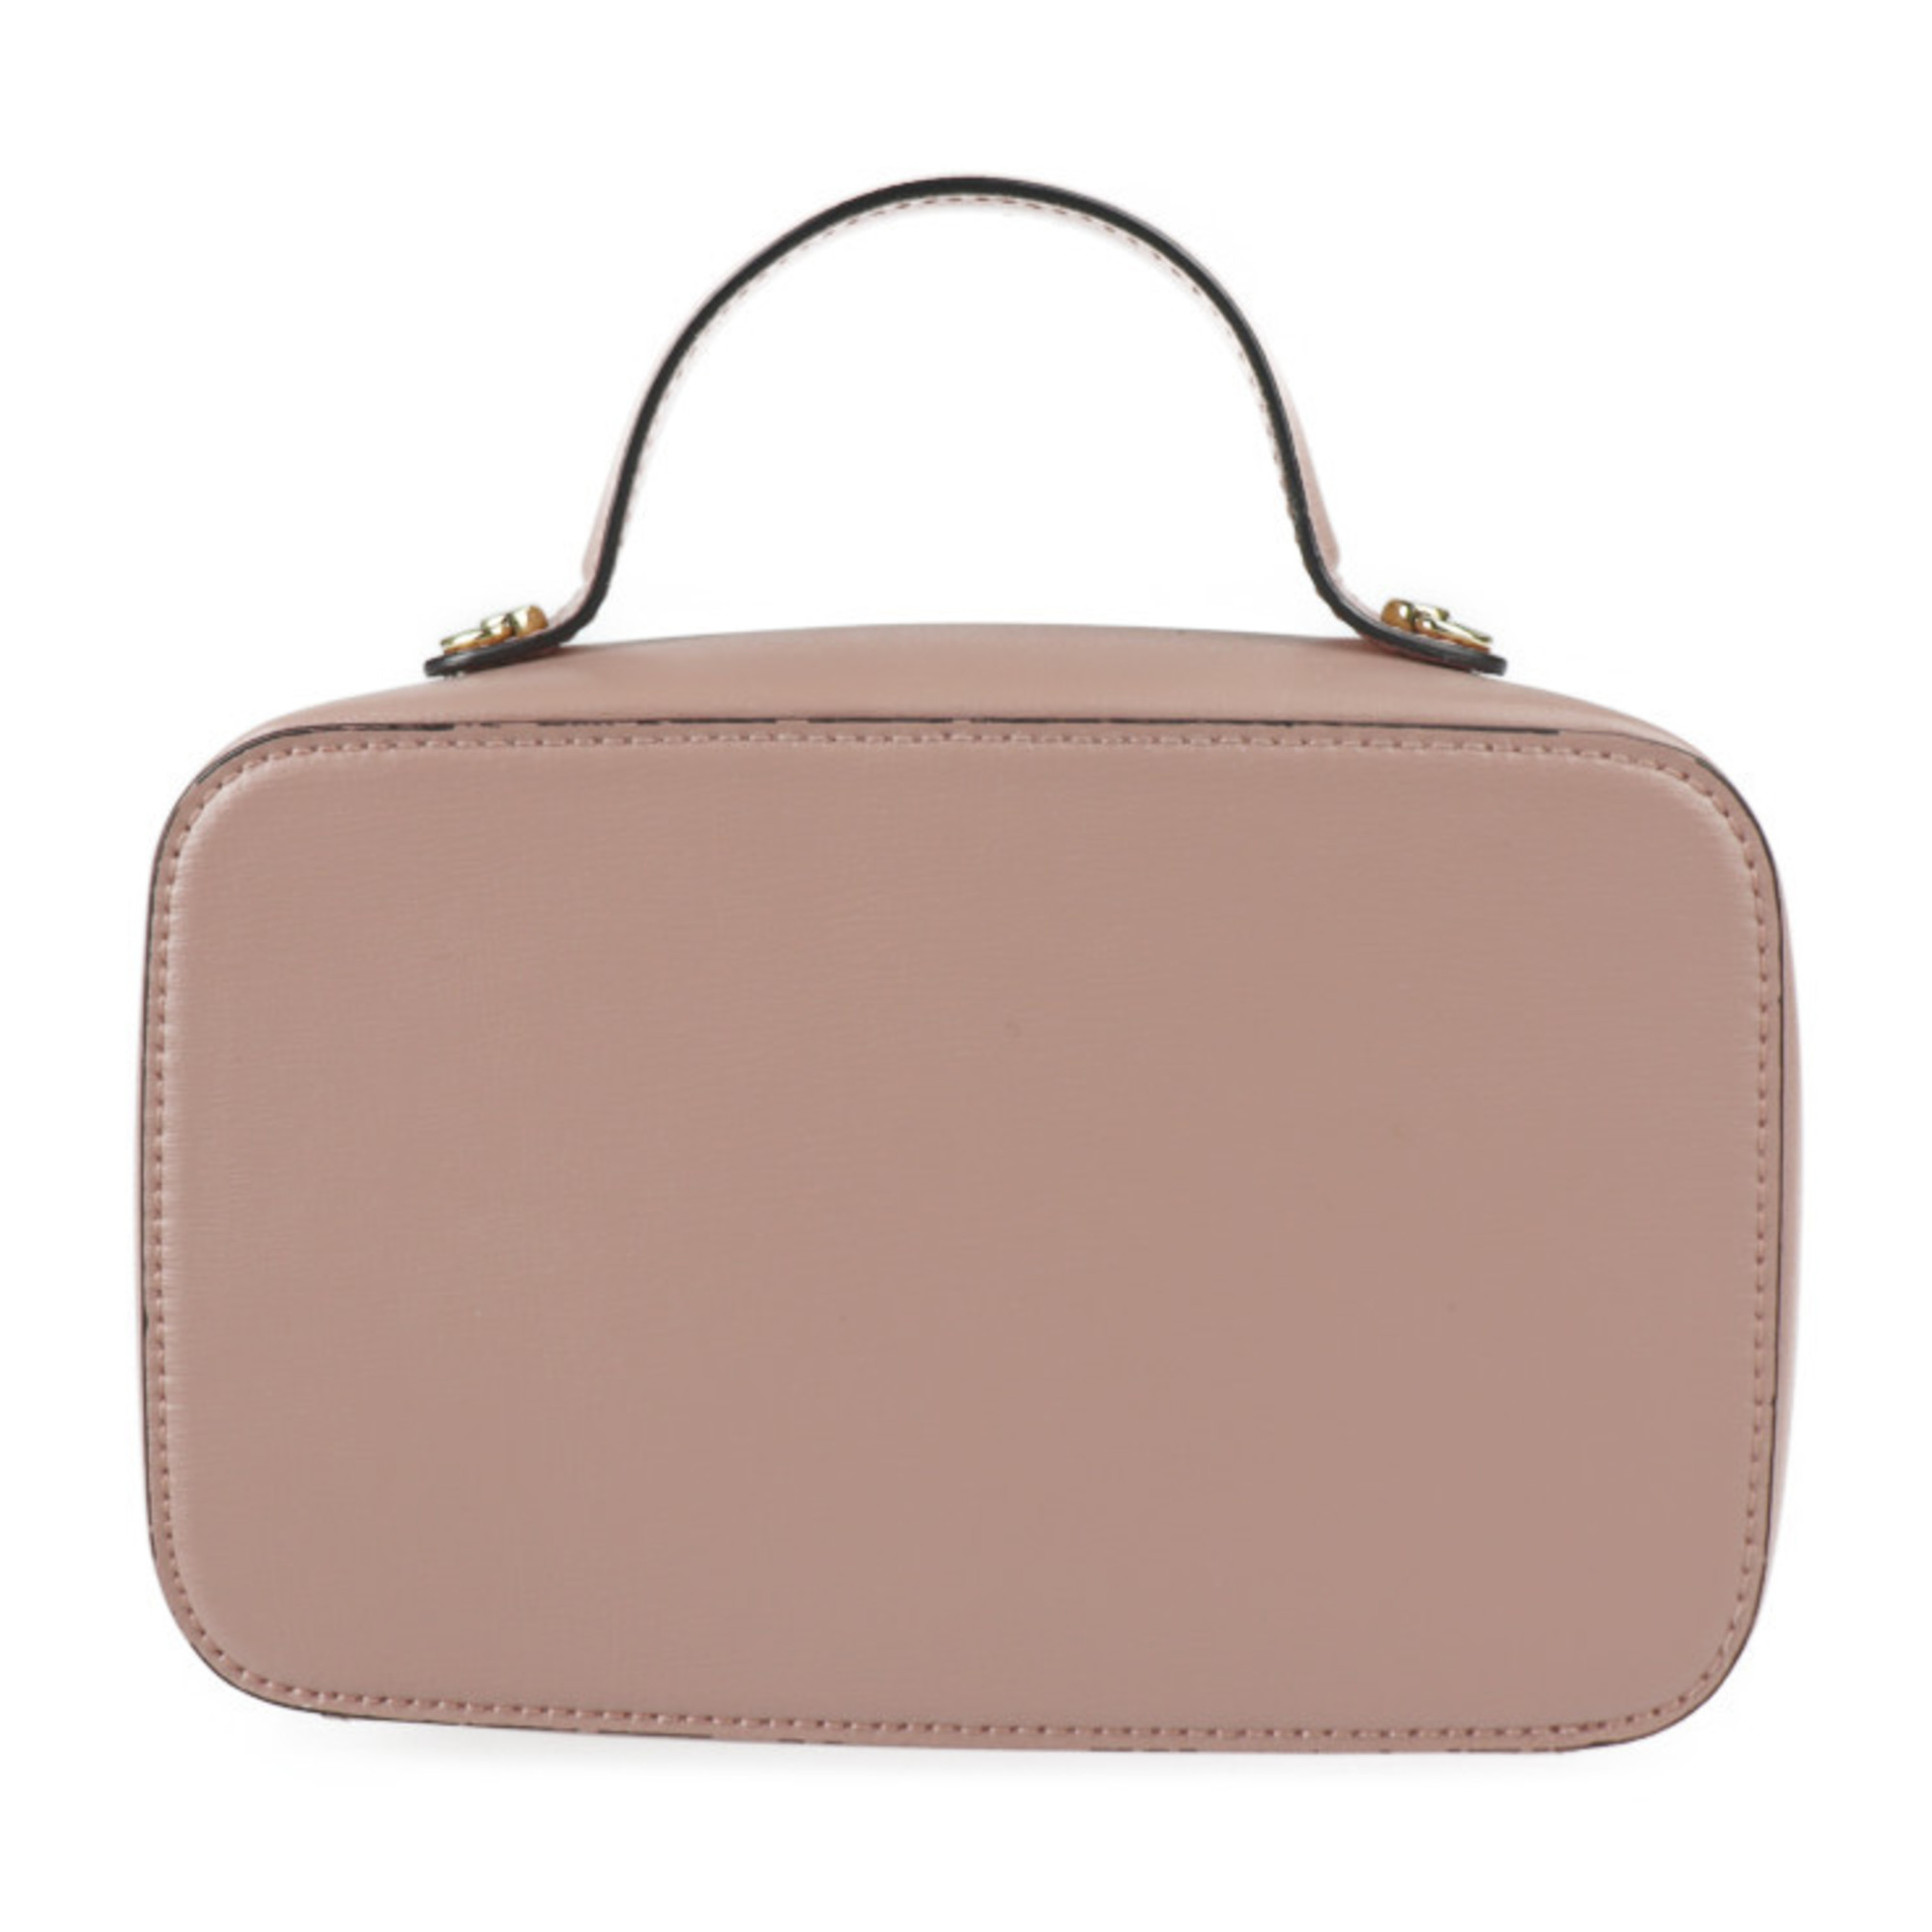 Salvatore Ferragamo Vara shoulder bag 22 E004 calf leather pink beige gold hardware 2WAY handbag pochette ribbon